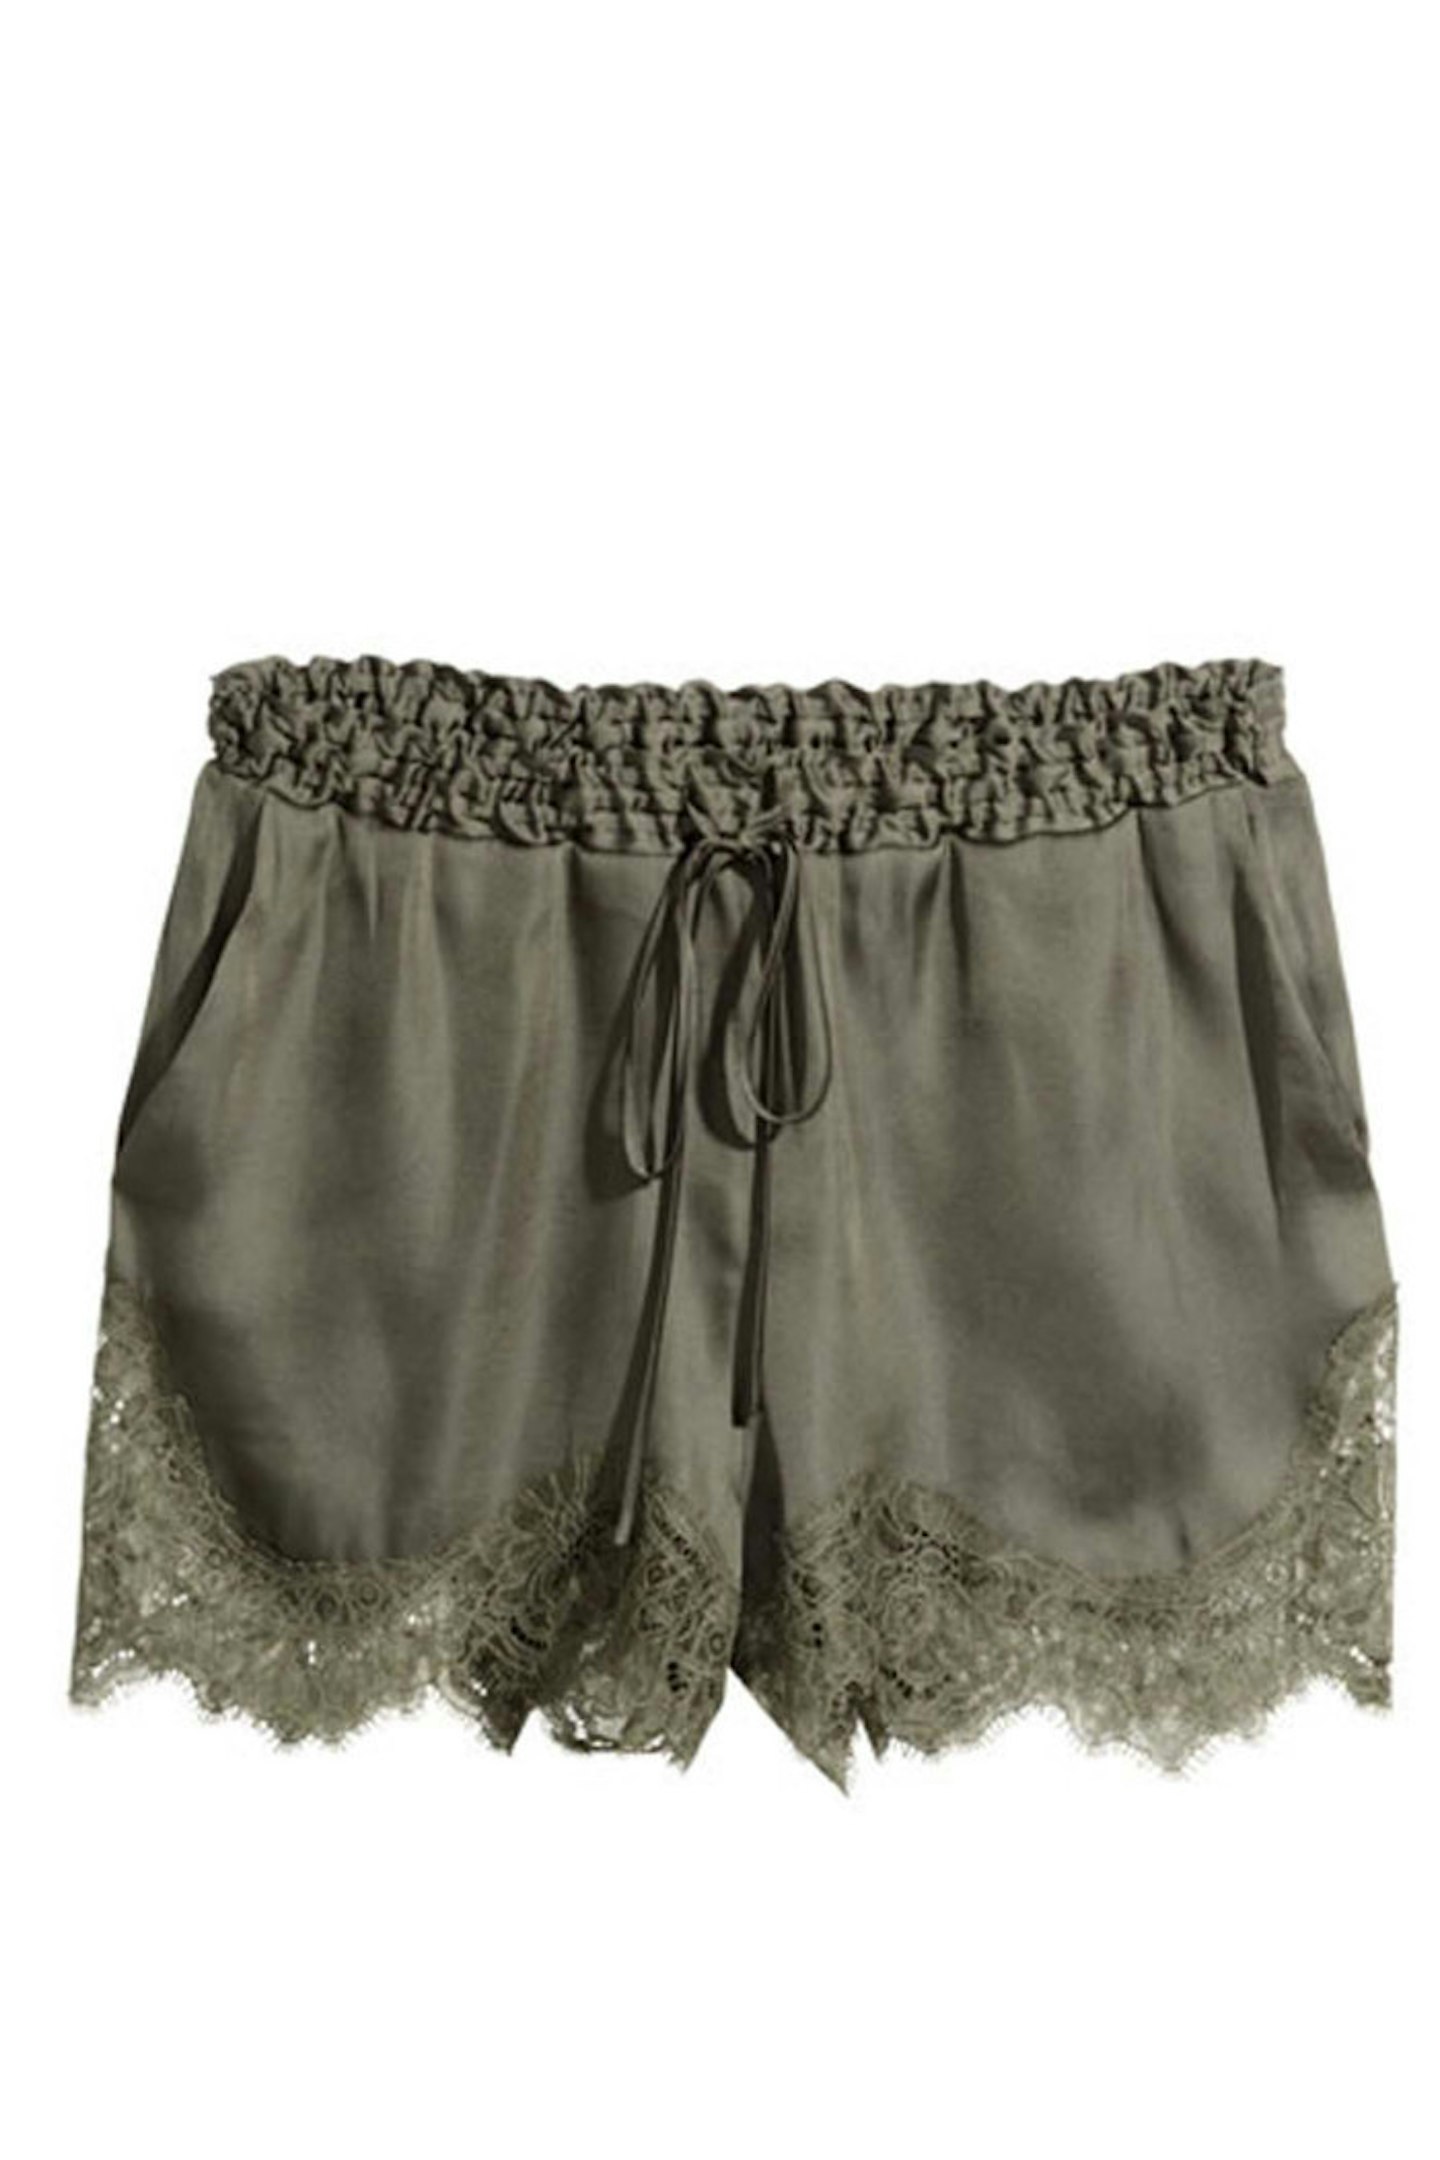 lace shorts, £14.99, H&M